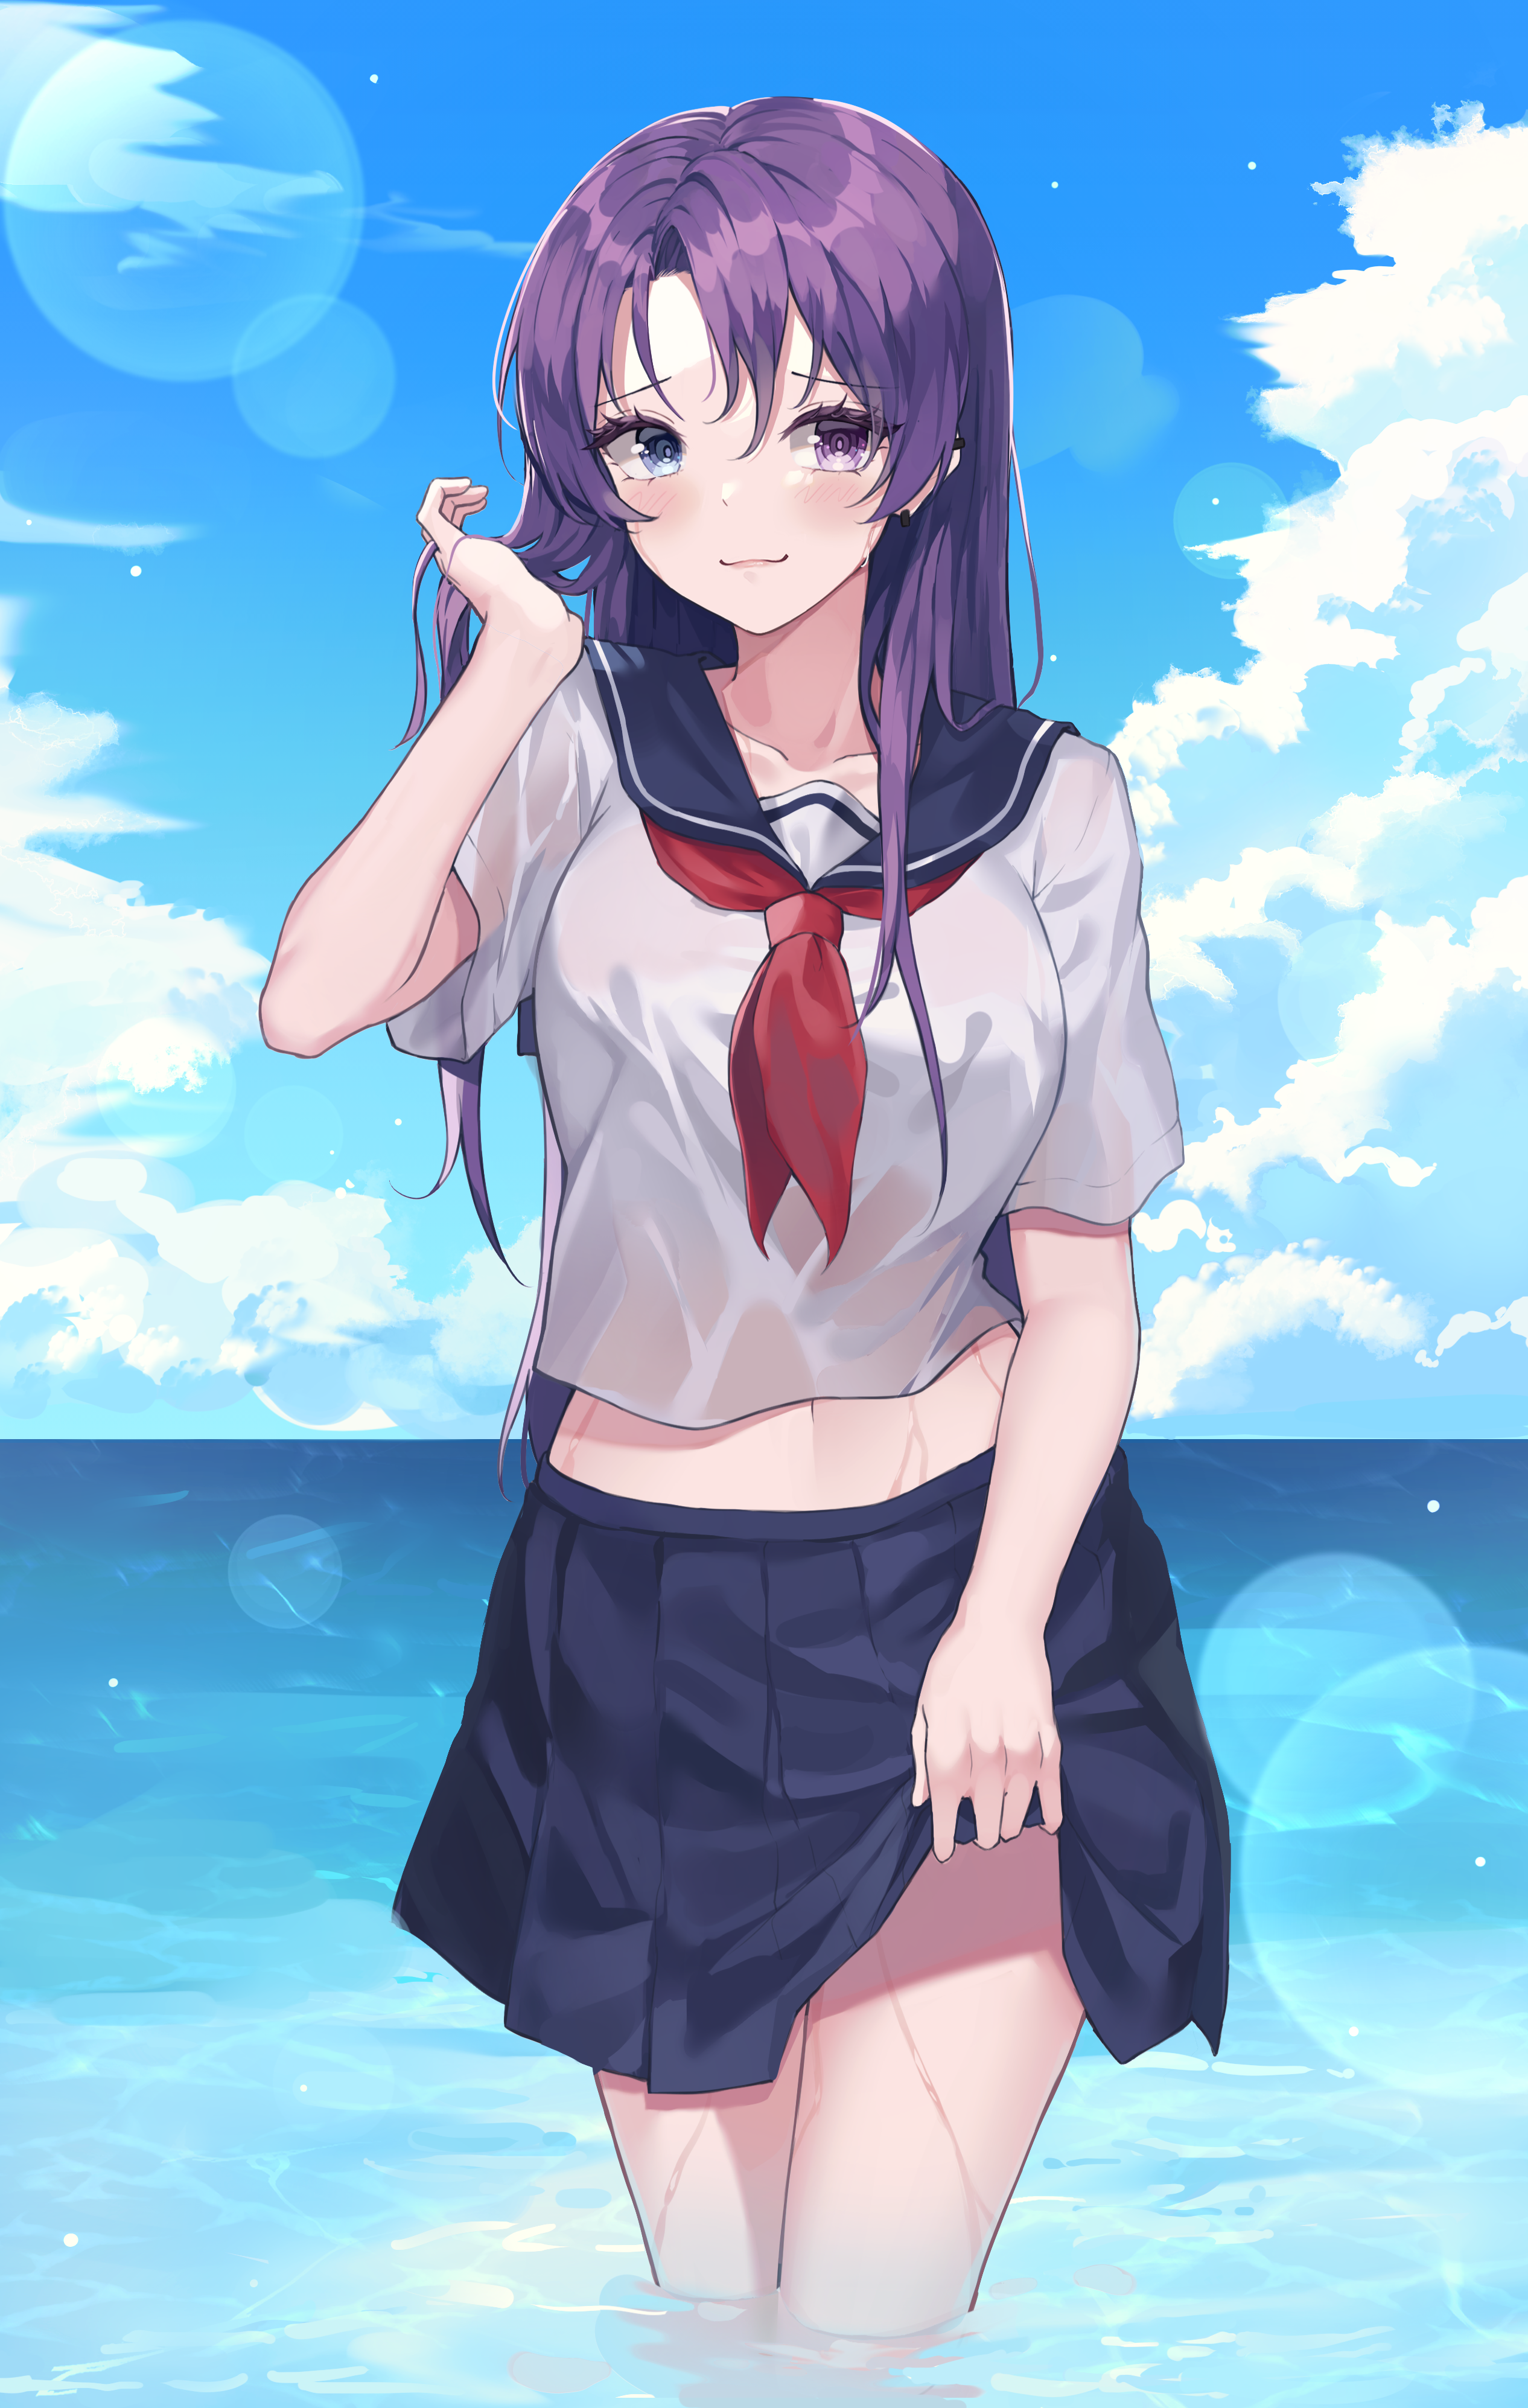 Anime 2532x3989 anime girls schoolgirl school uniform beach purple hair heterochromia lifting skirt luxiel wet body clouds standing in water